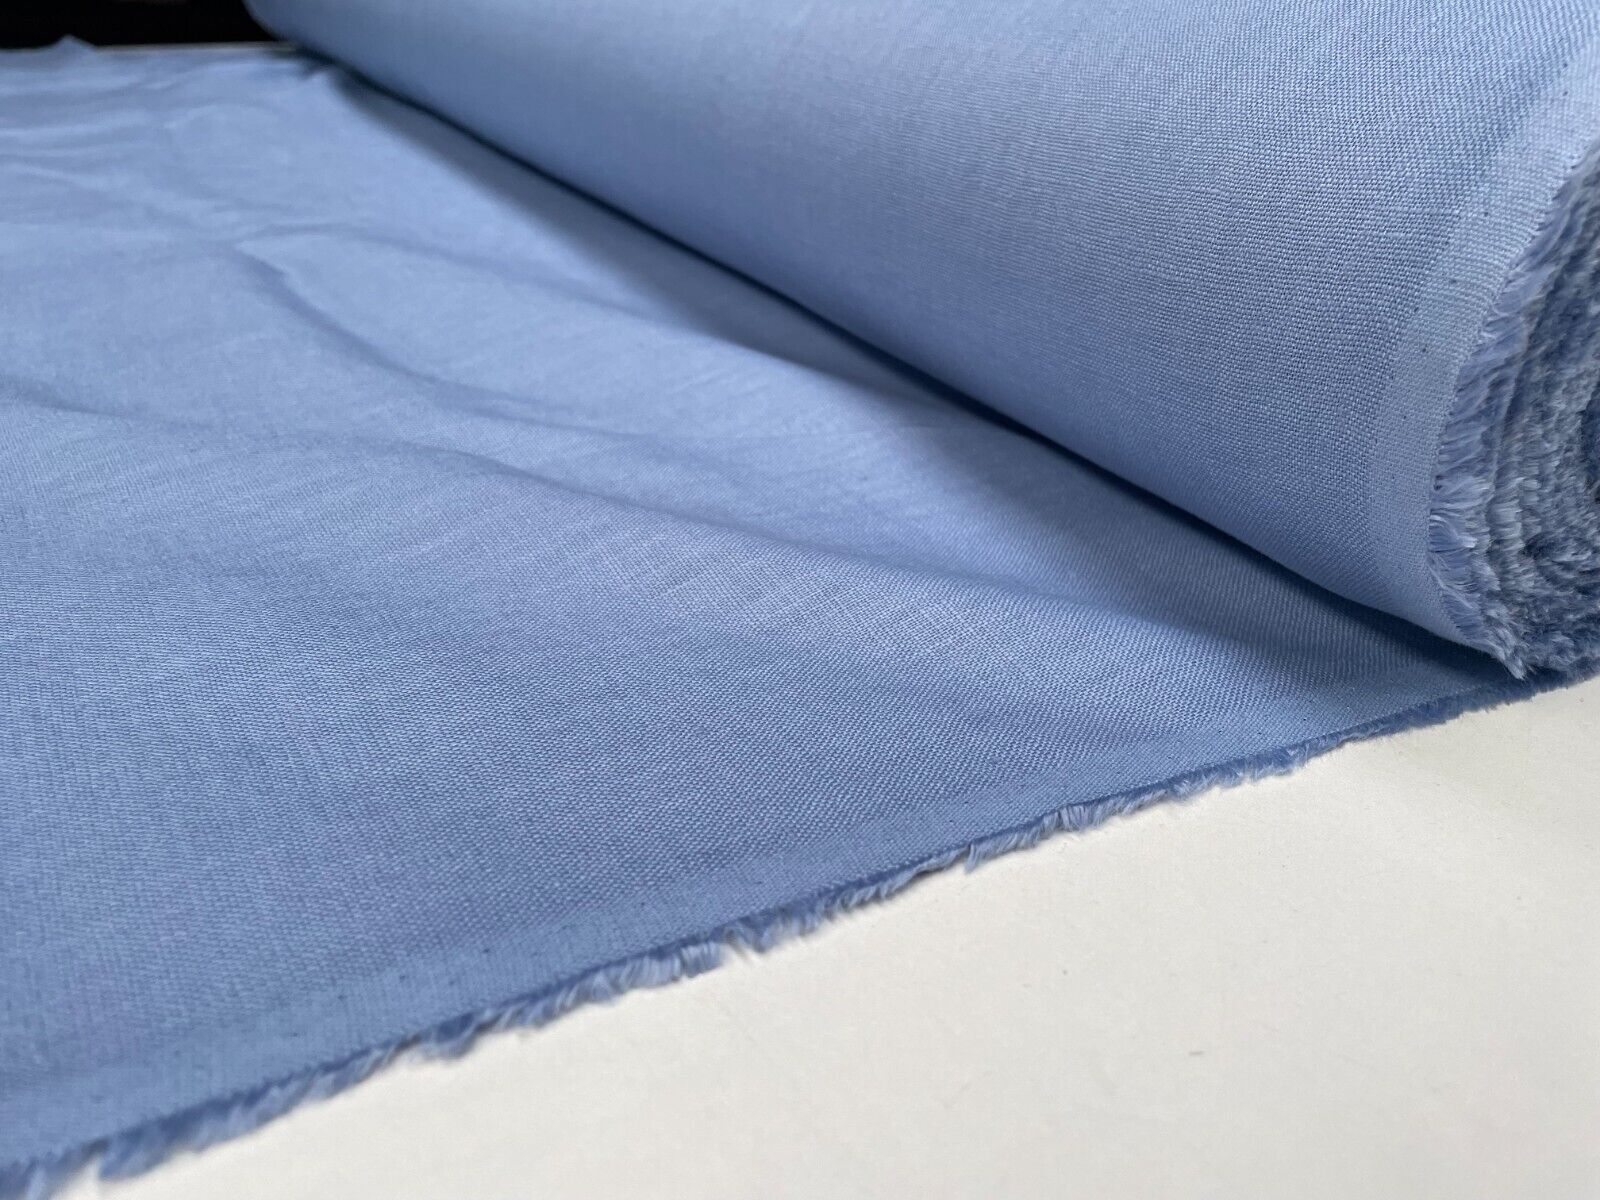 Soft Linen Fabric Material - 100% Linens Textile for Home Decor ...